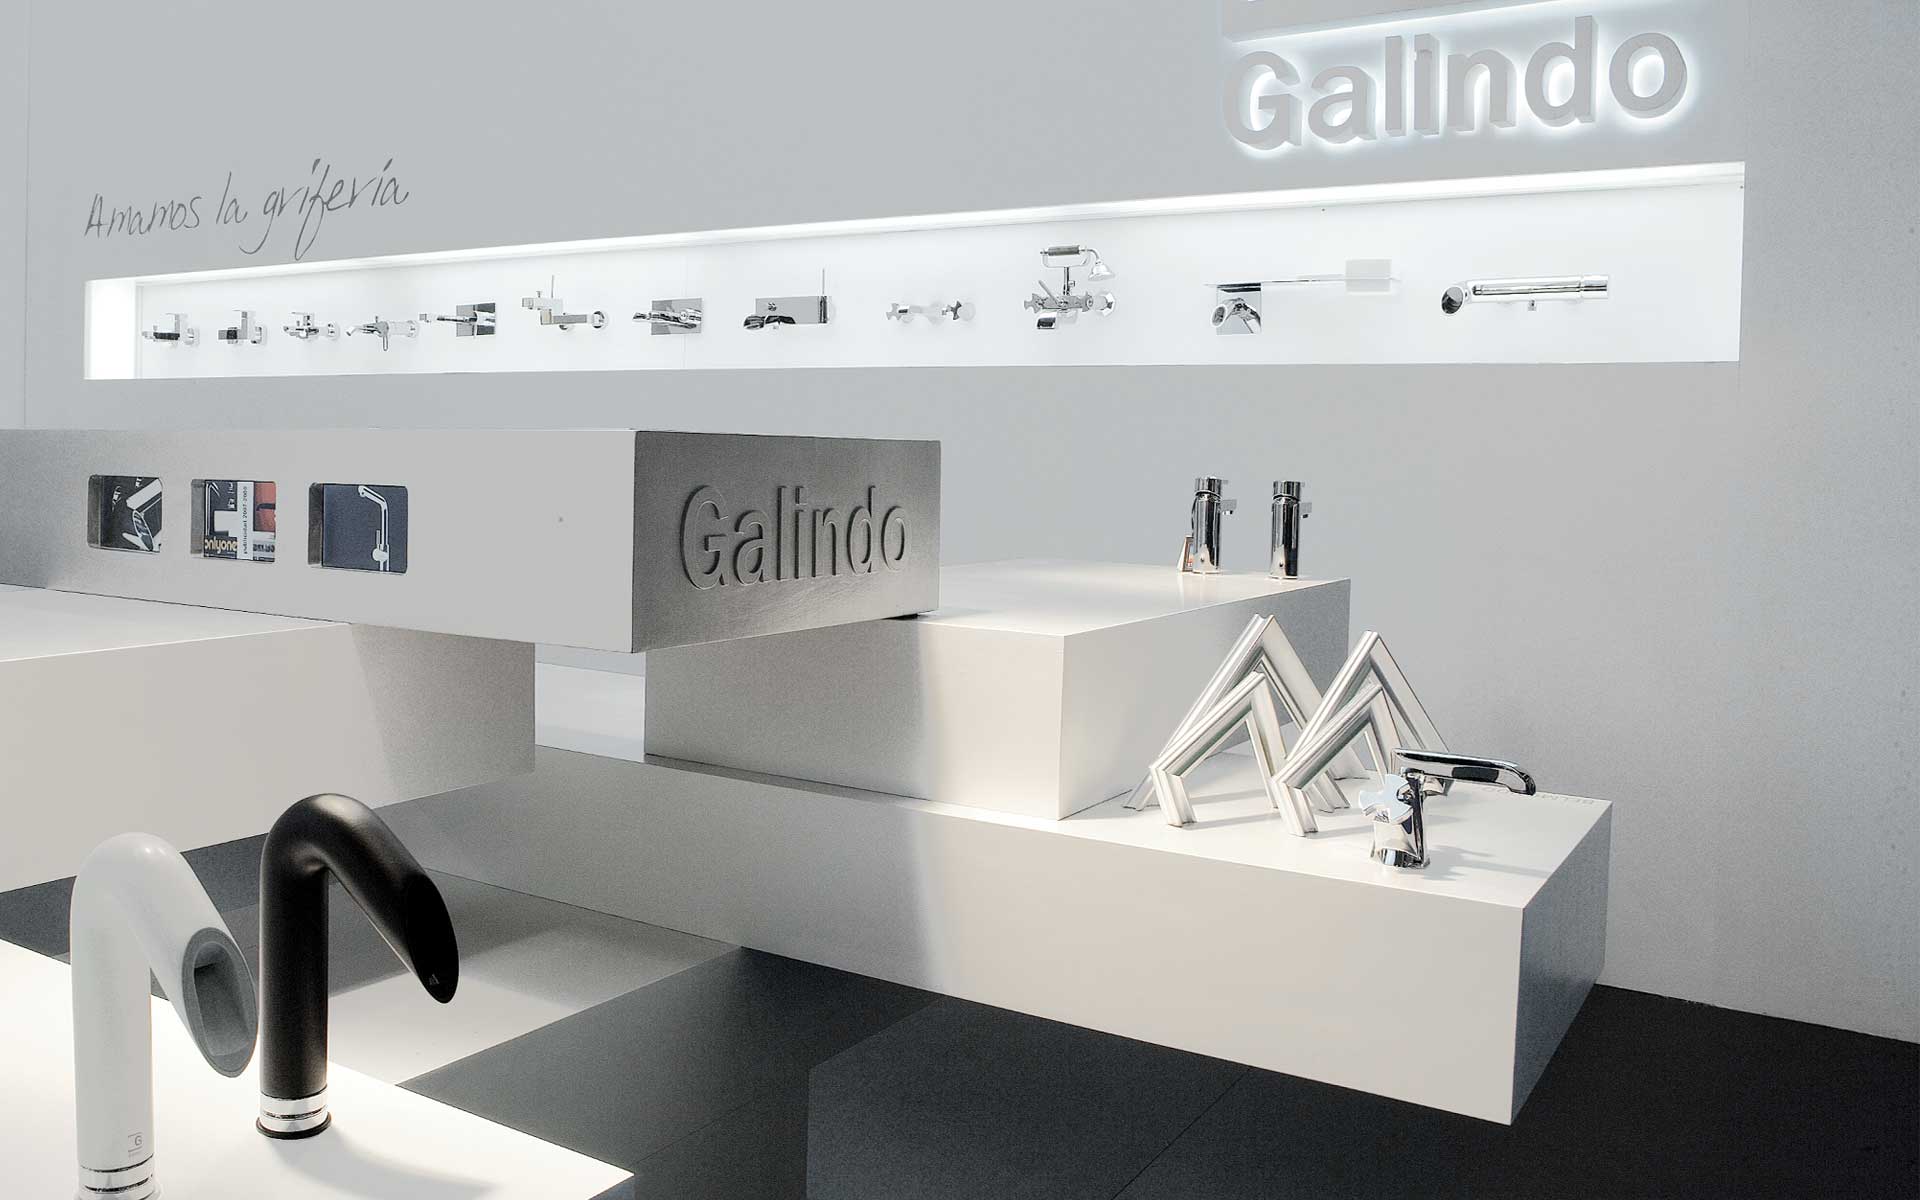 Construmat trade fair (EXPO) faucet stand design builded in Barcelona